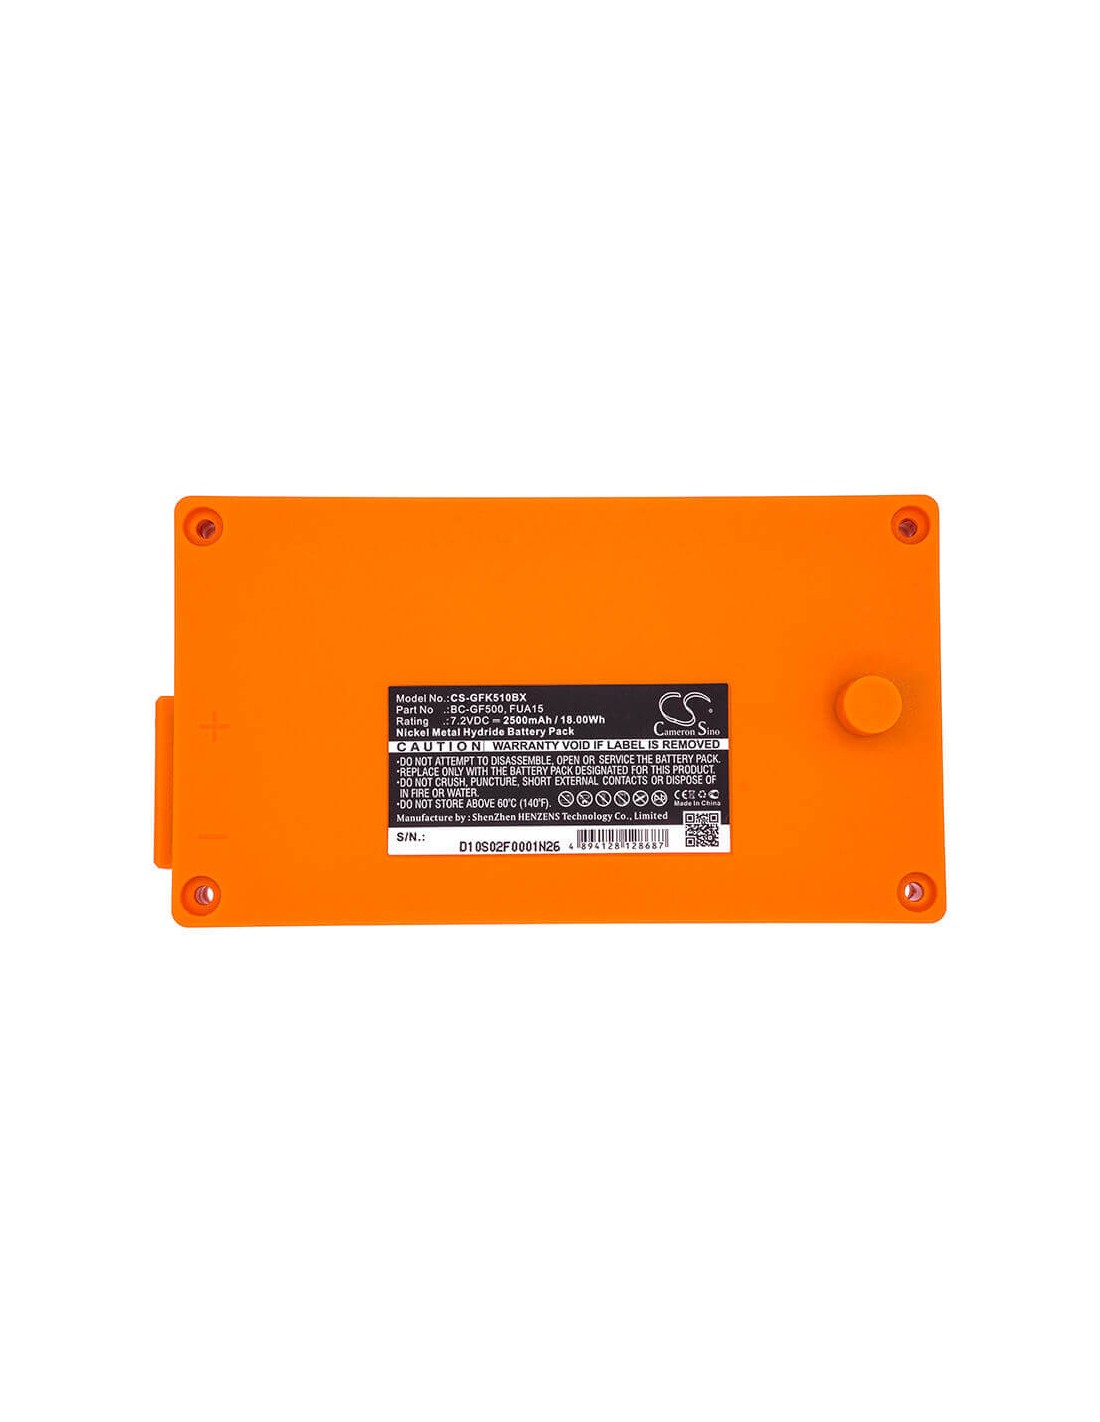 Battery for Gross Funk Crane Remote Control, Gf500 7.2V, 2500mAh - 18.00Wh